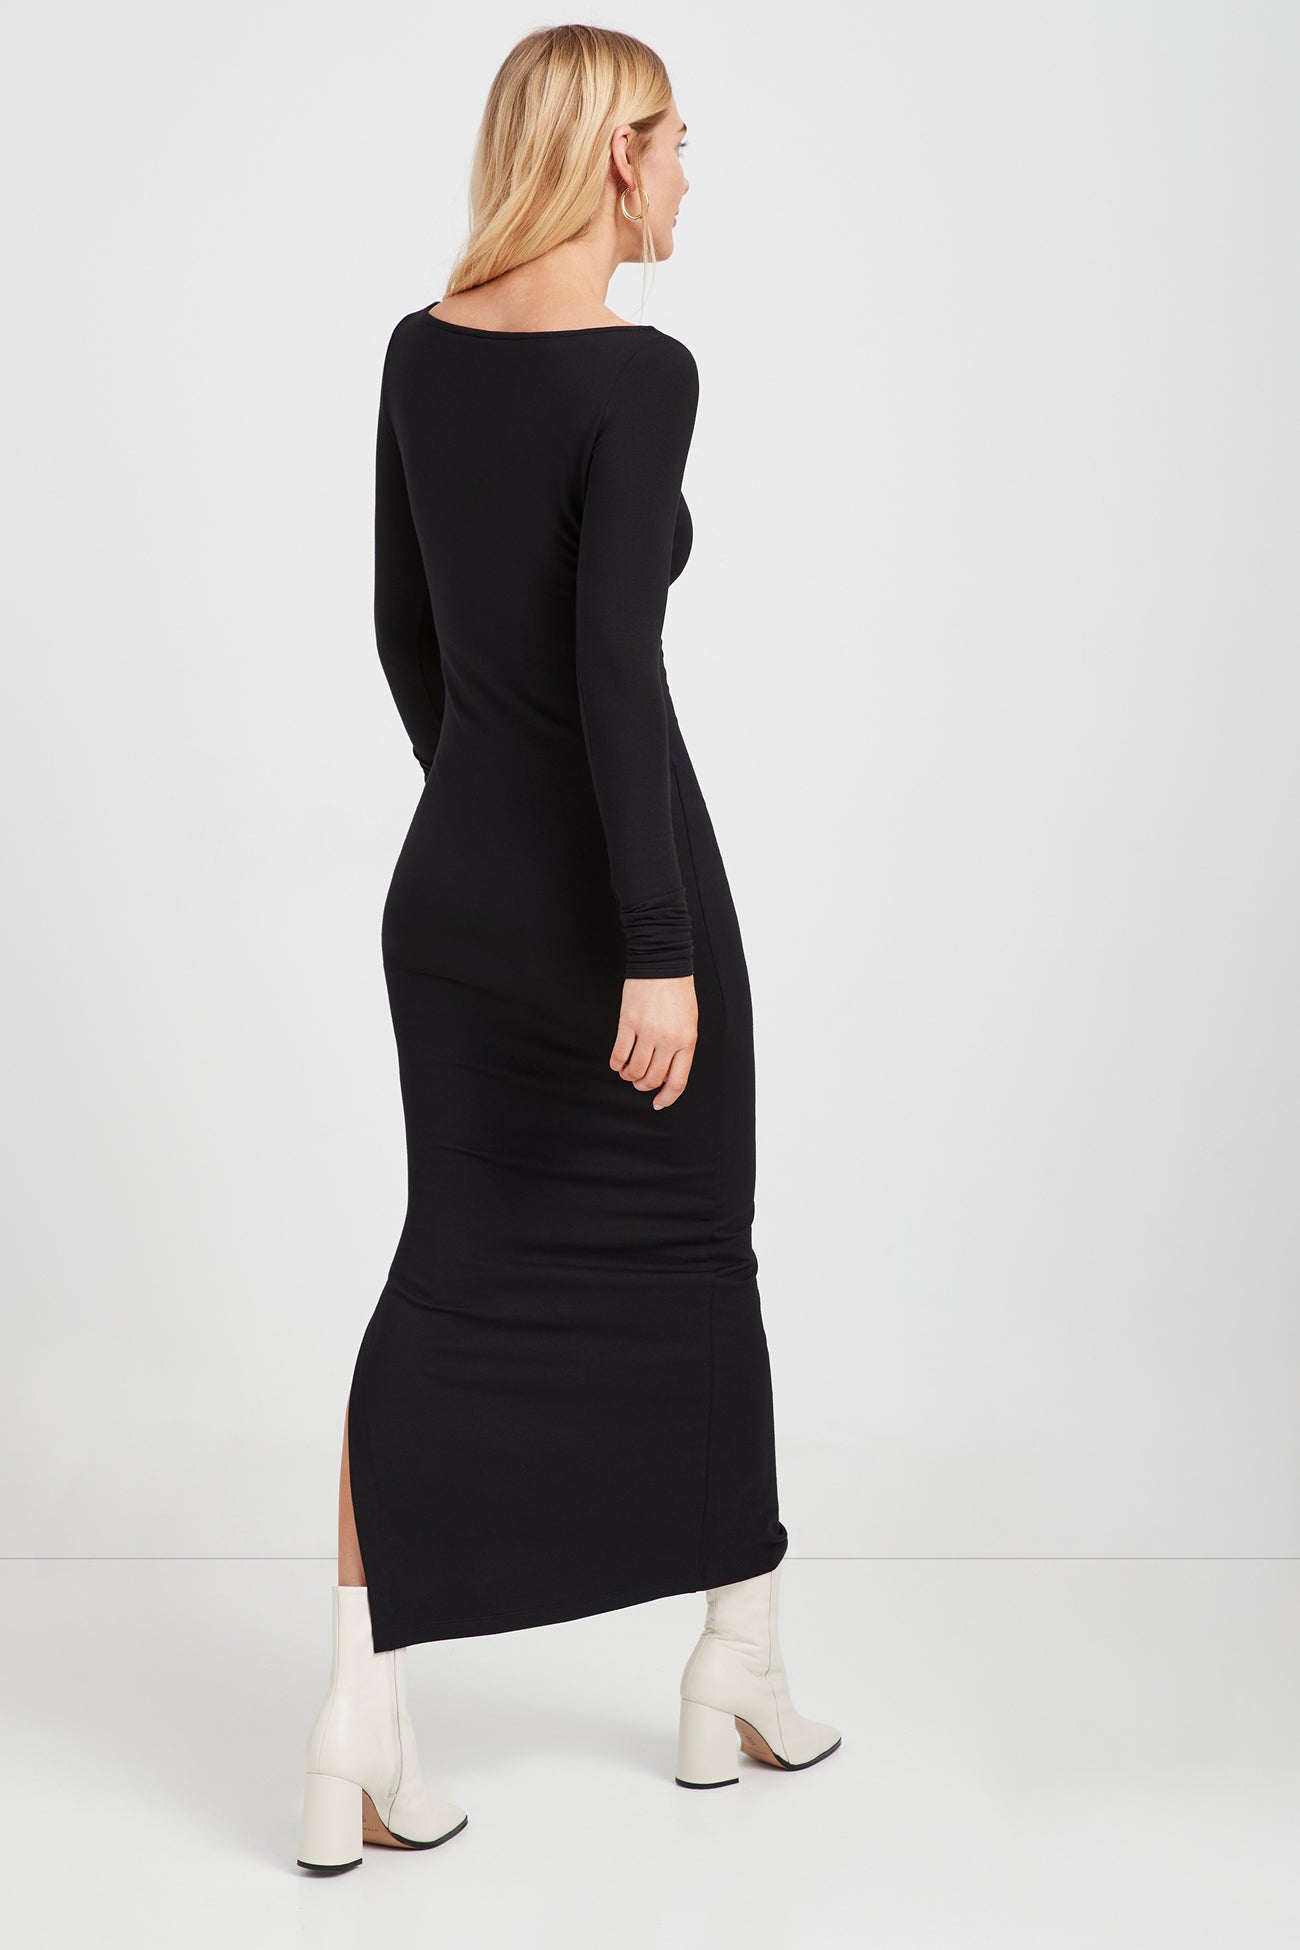 Black Long V-Neck Sweatshirt Dress - Lyric Dress | Marcella